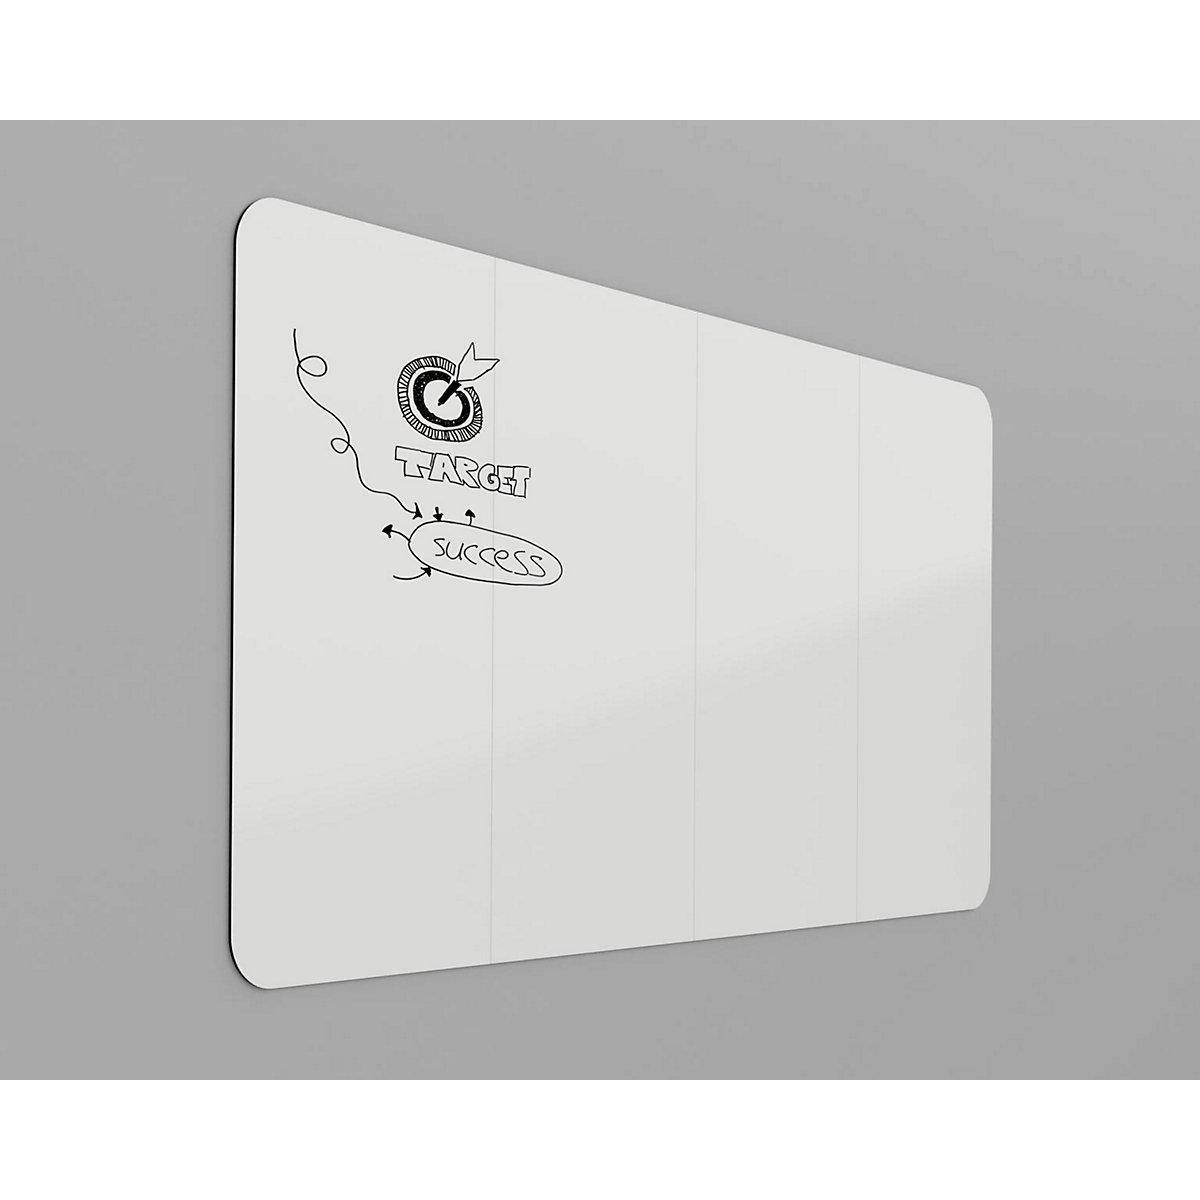 Design-XXL-whiteboard VisuWall – Chameleon (Productafbeelding 3)-2